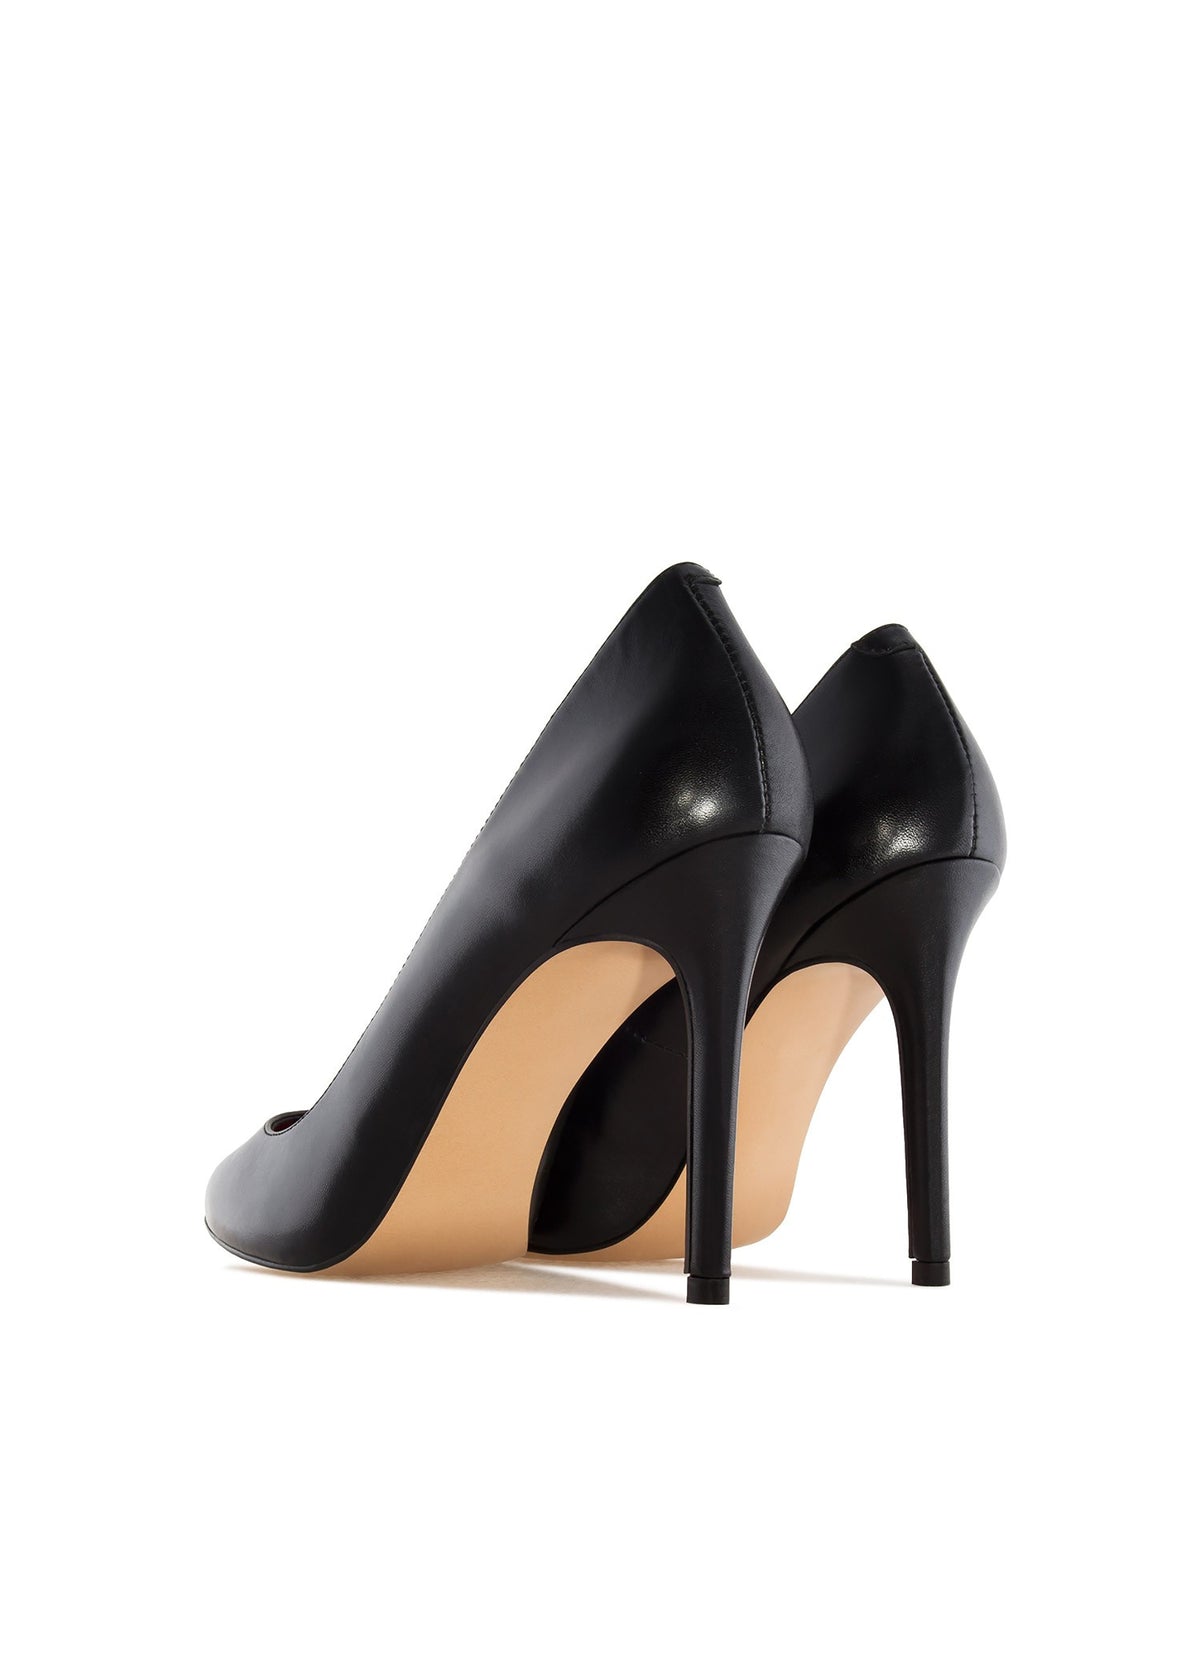 Stiletto heels - Diana, black leather